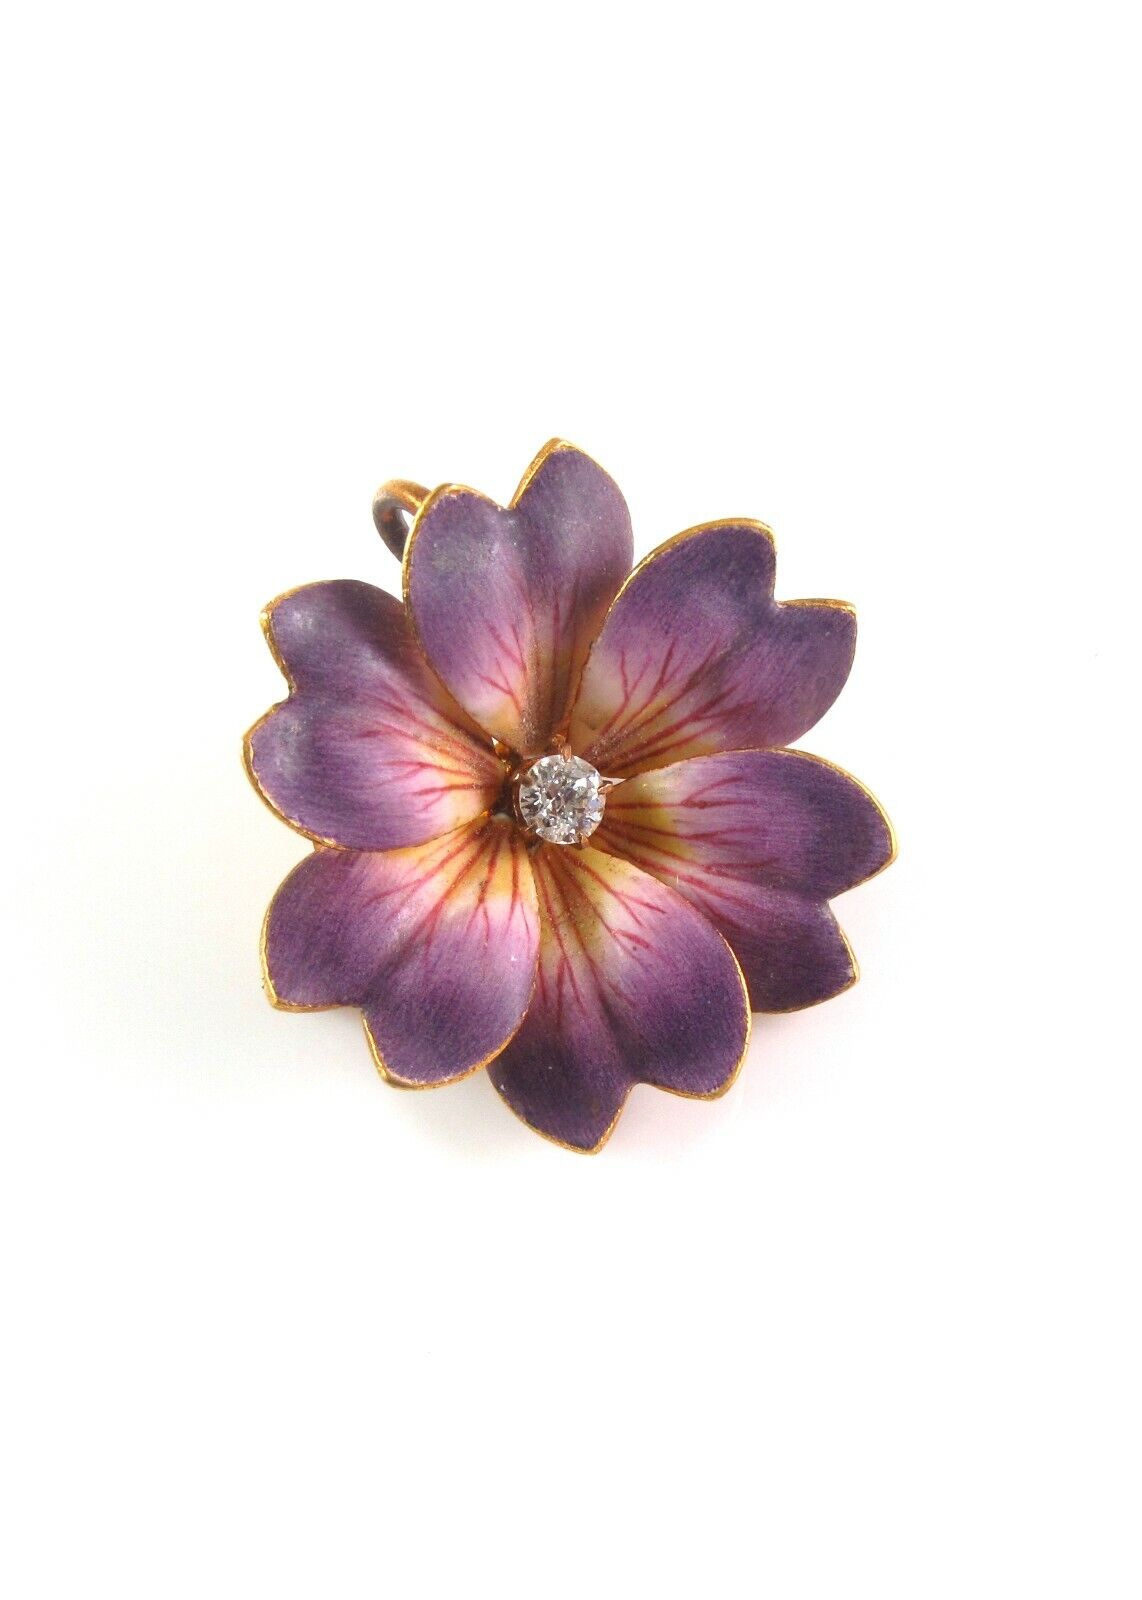 Carter Gough 14k Gold Art Nouveau Enamel Diamond Violet Flower Watch Pin Brooch